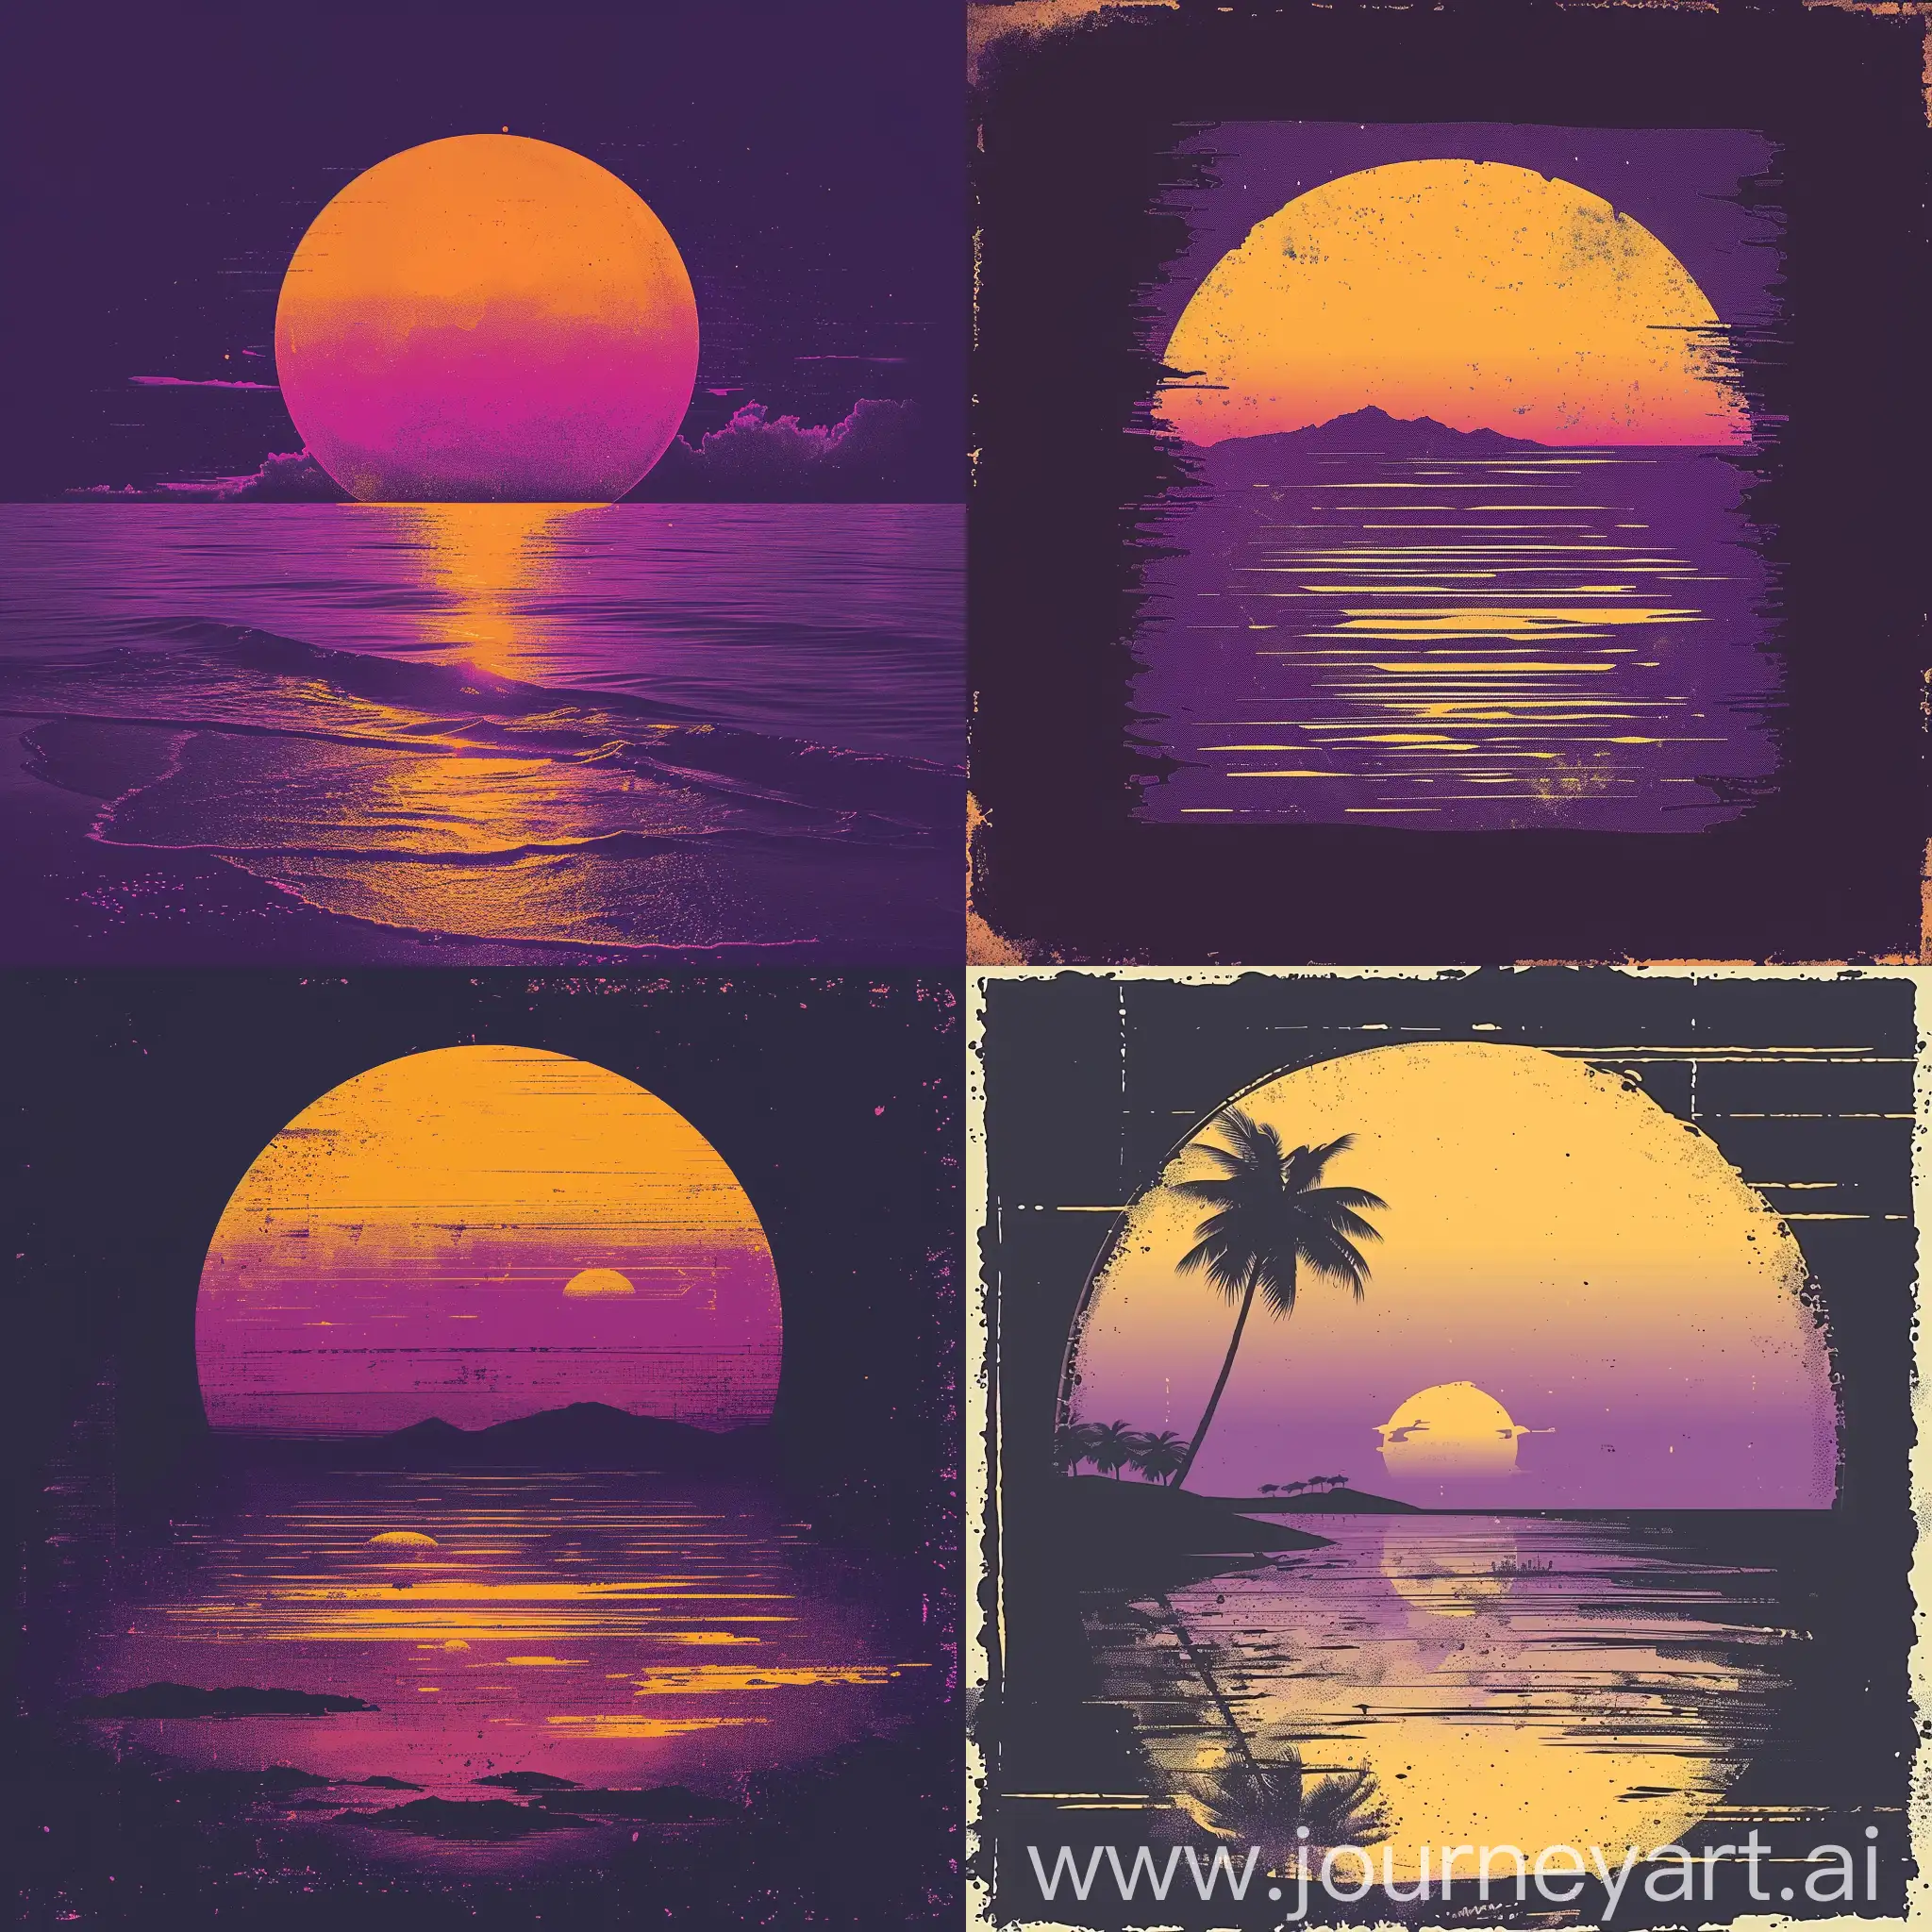 retro sunset in purple
and dark yellow colors
